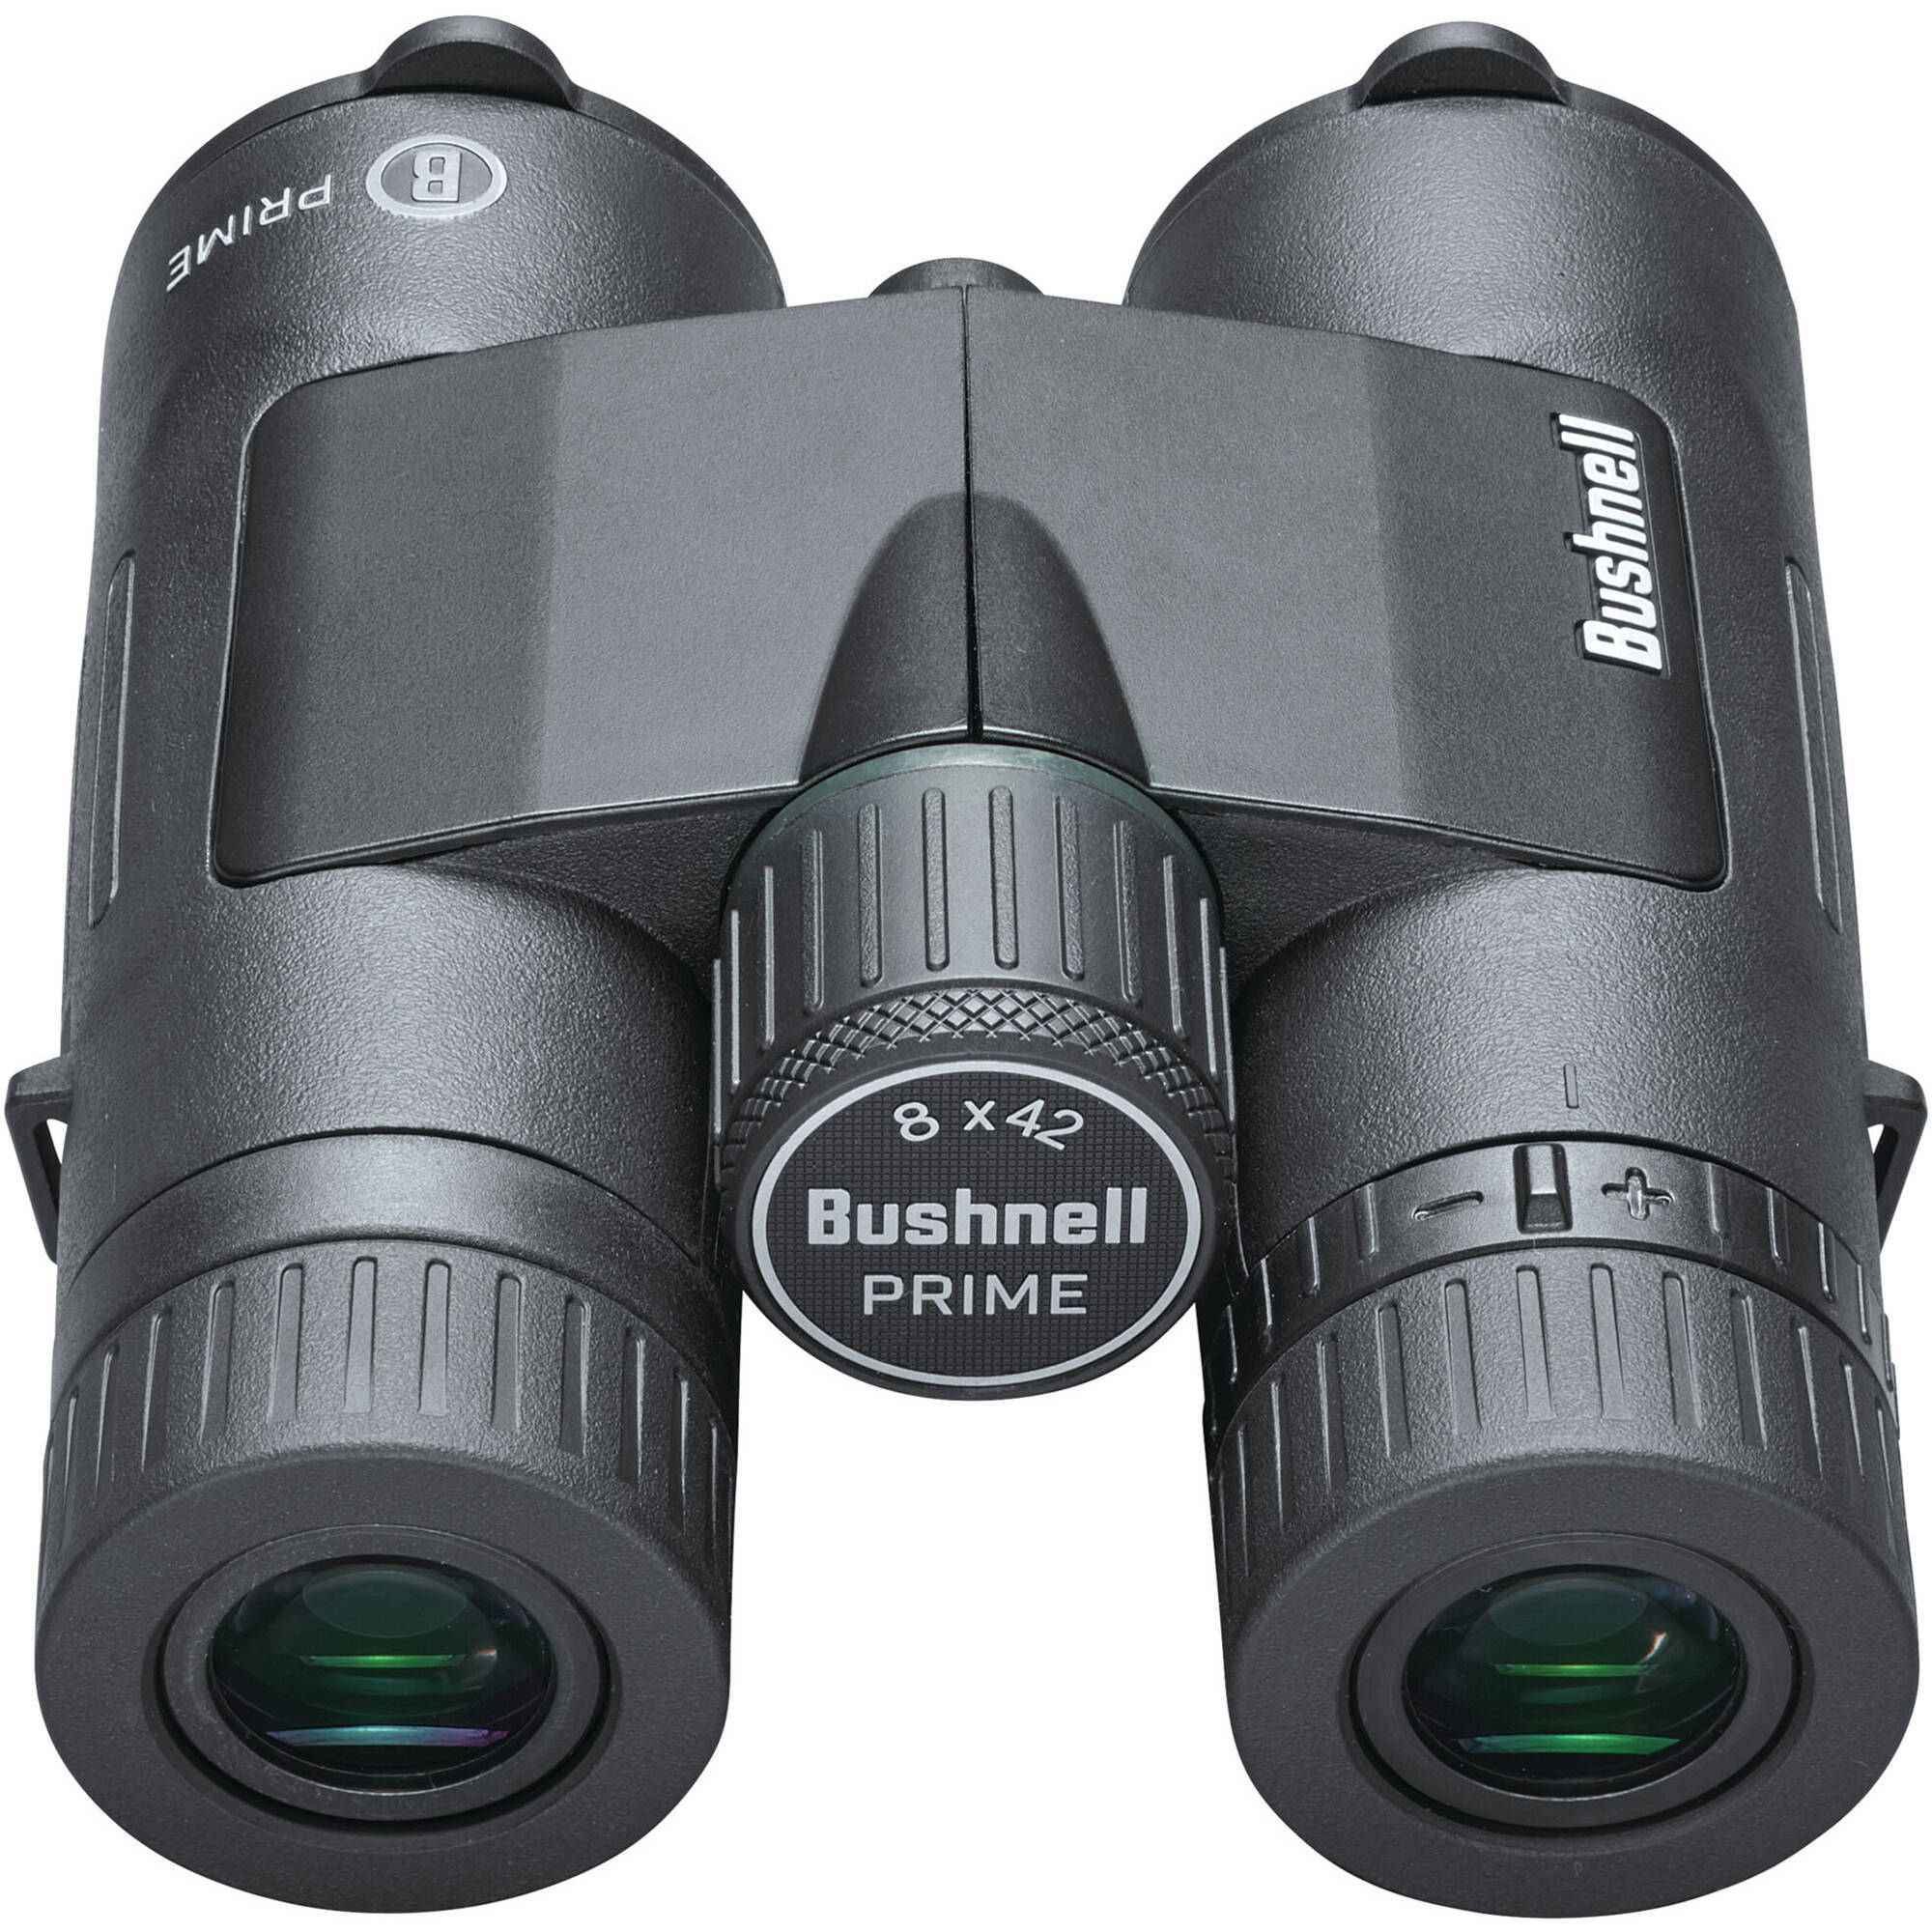 Bushnell 8x42 Prime Waterproof Binoculars